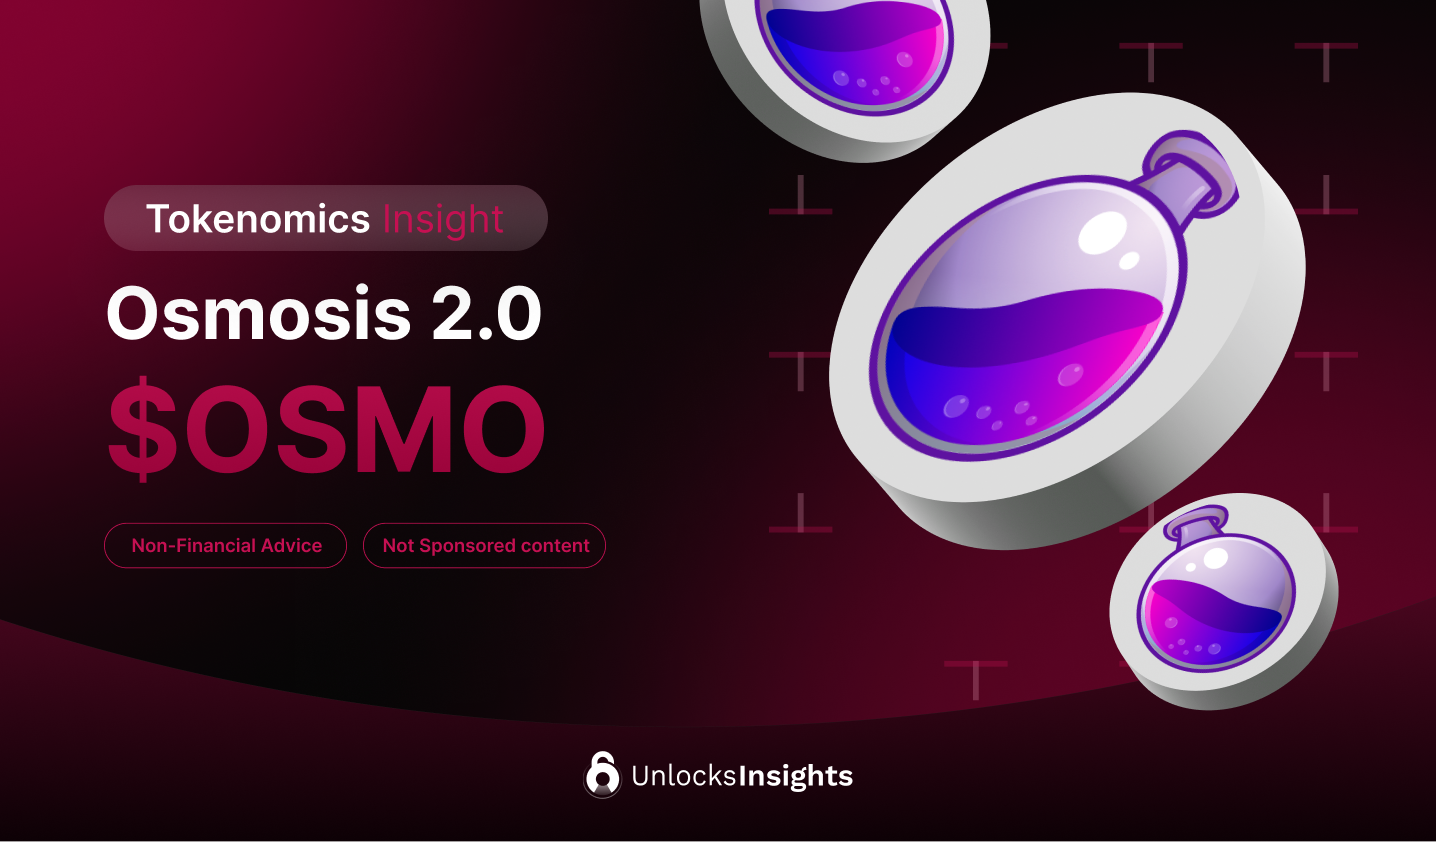 OSMO 2.0 : Upcoming Tokenomics Upgrade for Osmosis